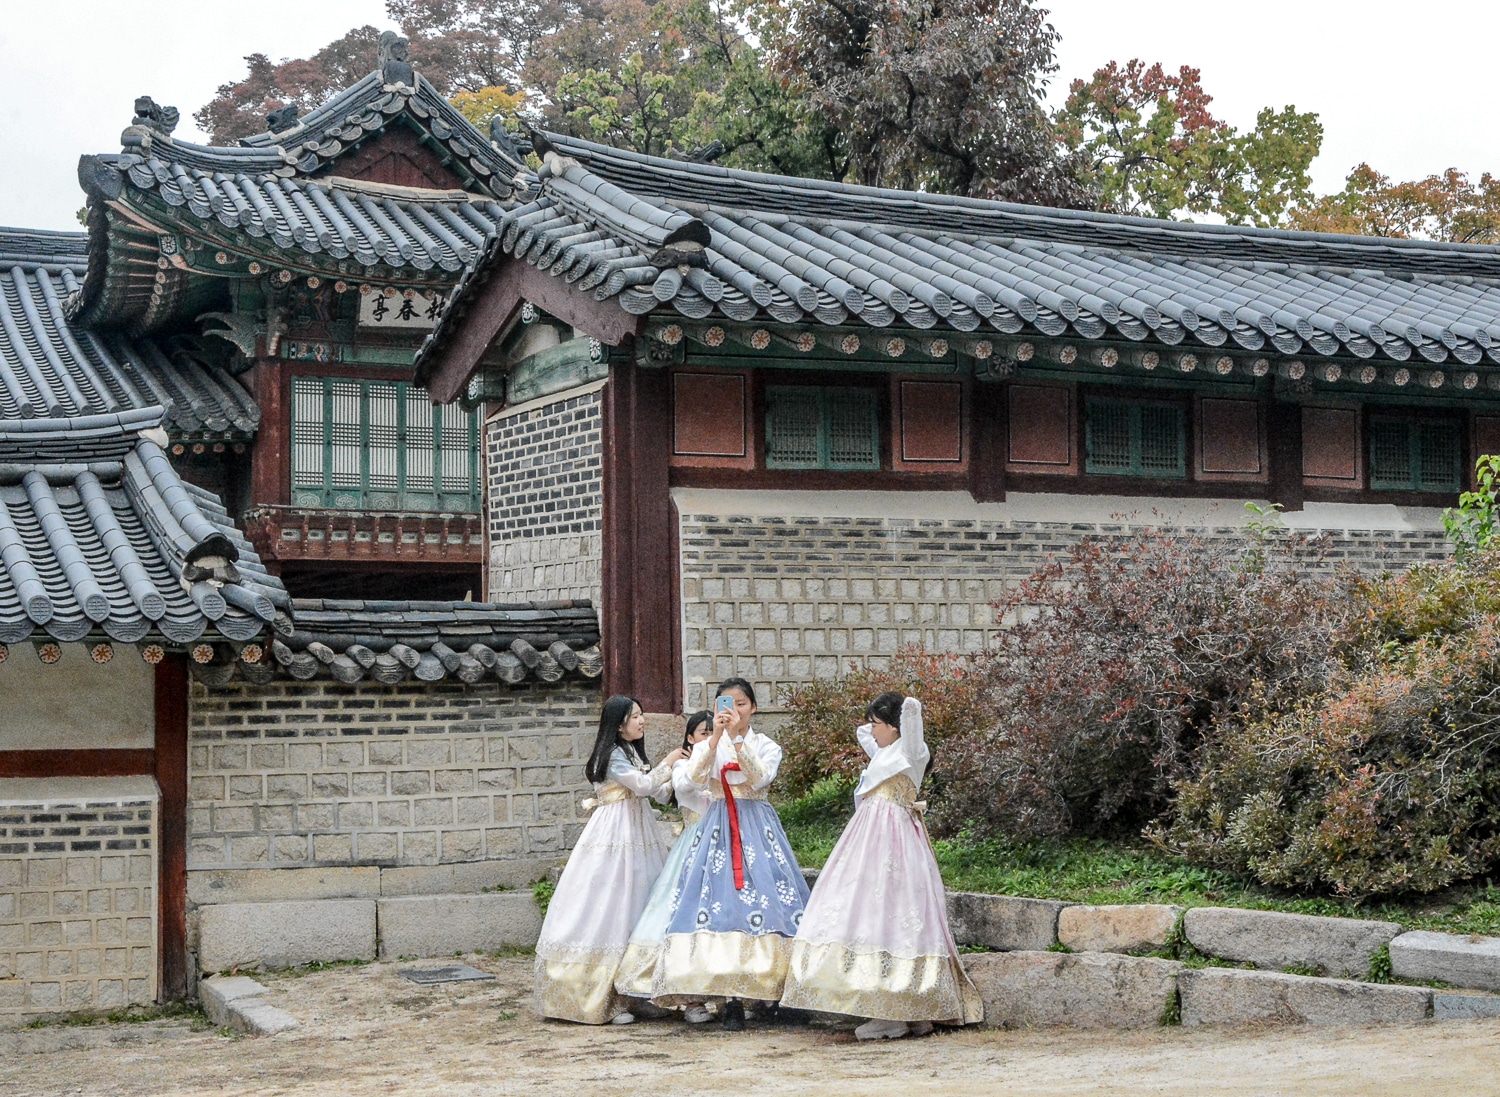 Seoul Tipps und Sightseeing in Seoul: 12 Highlights in Koreas Hauptstadt - Changdeokgung Palace